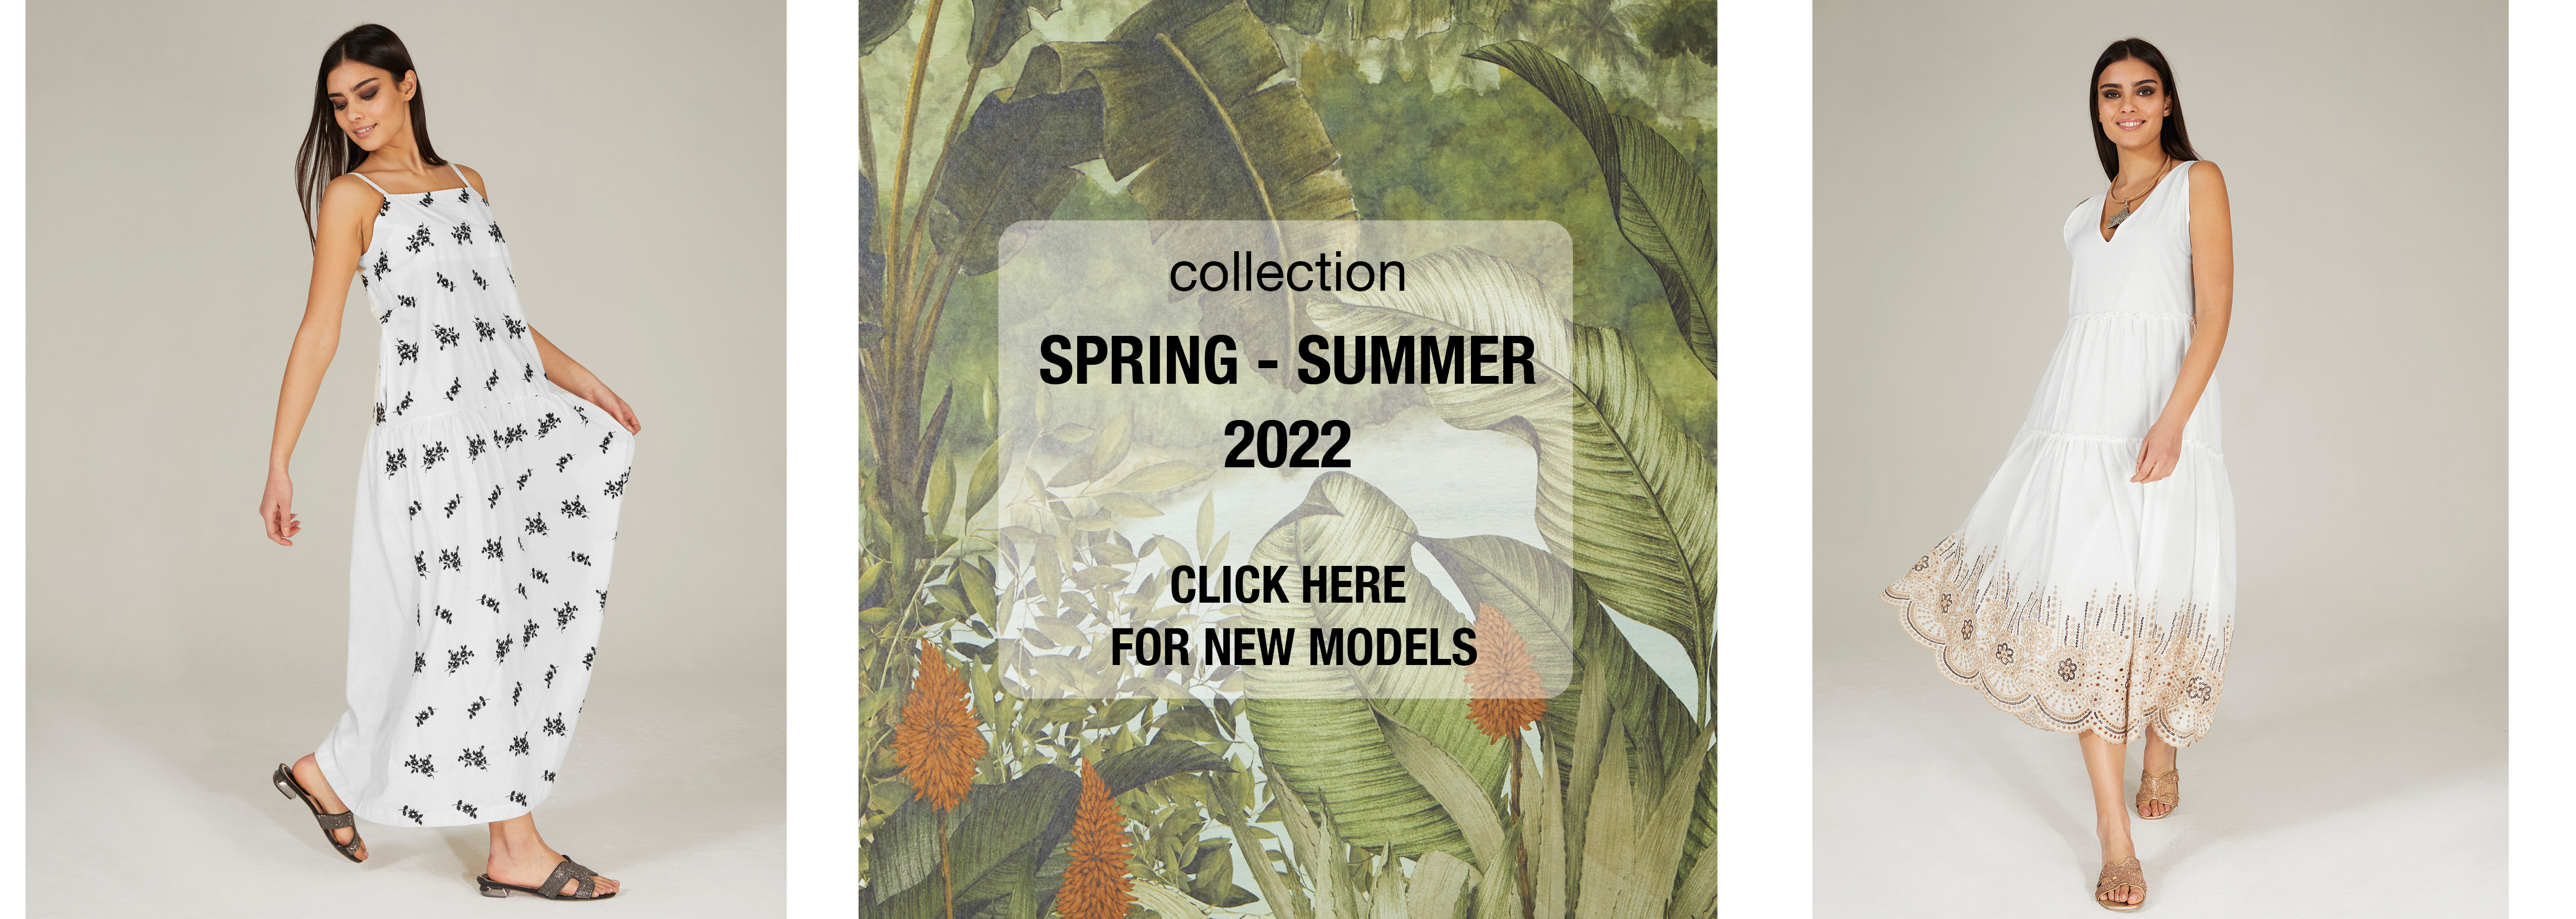 Mitika 2022 Spring Summer Collection slide 4